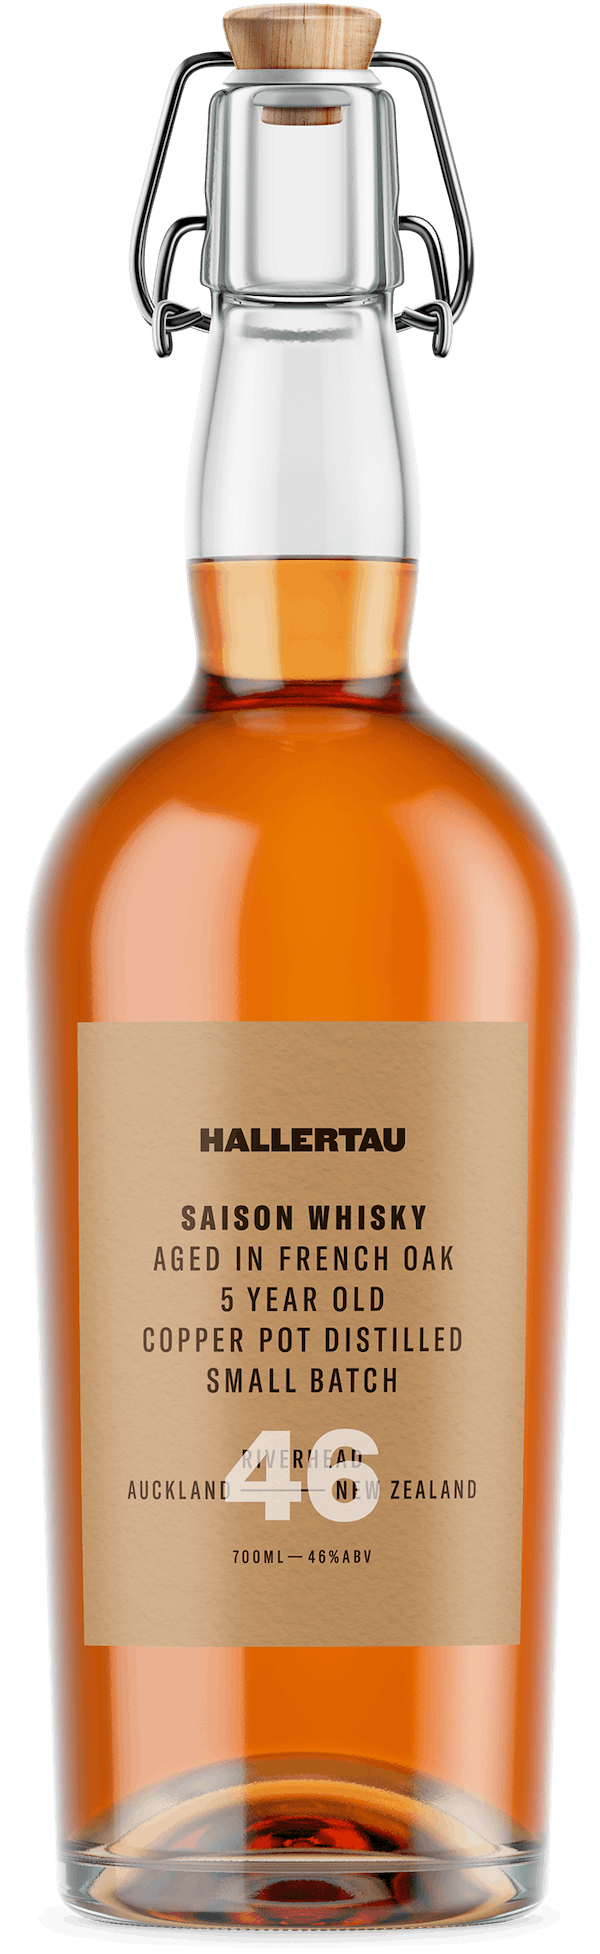 Hallertau Saison Whisky 5 Year Old